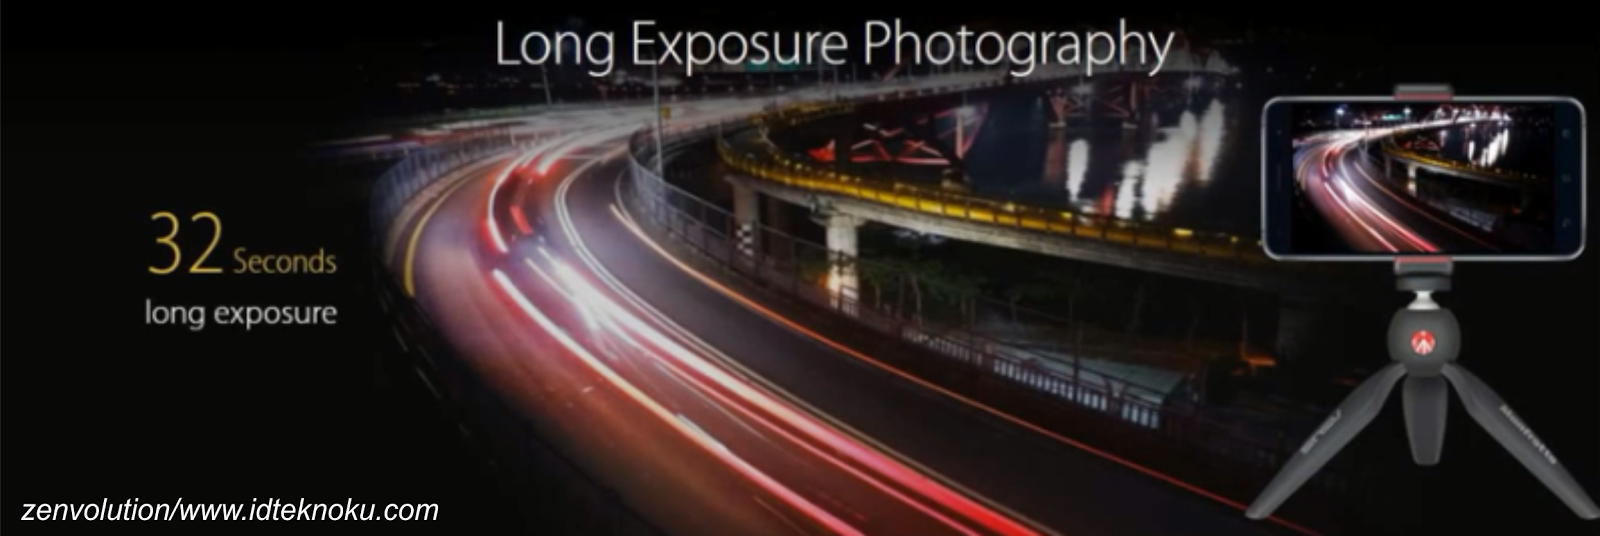 20 Alasan Memilih ASUS ZenFone 3, Smartphone Built For Photography